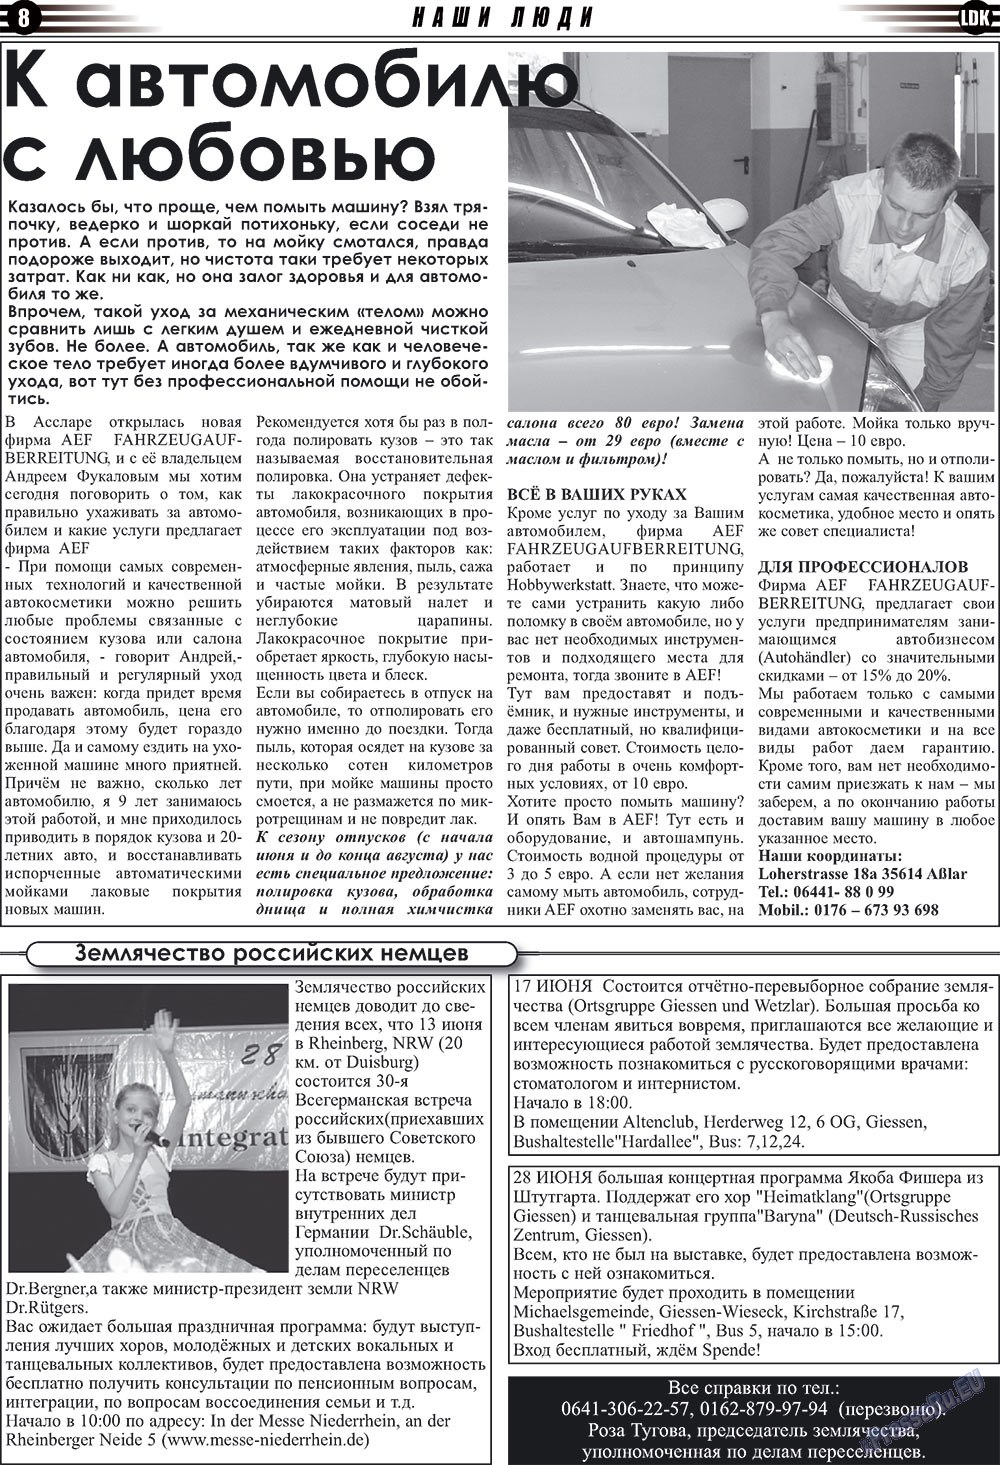 LDK по-русски, газета. 2009 №6 стр.8